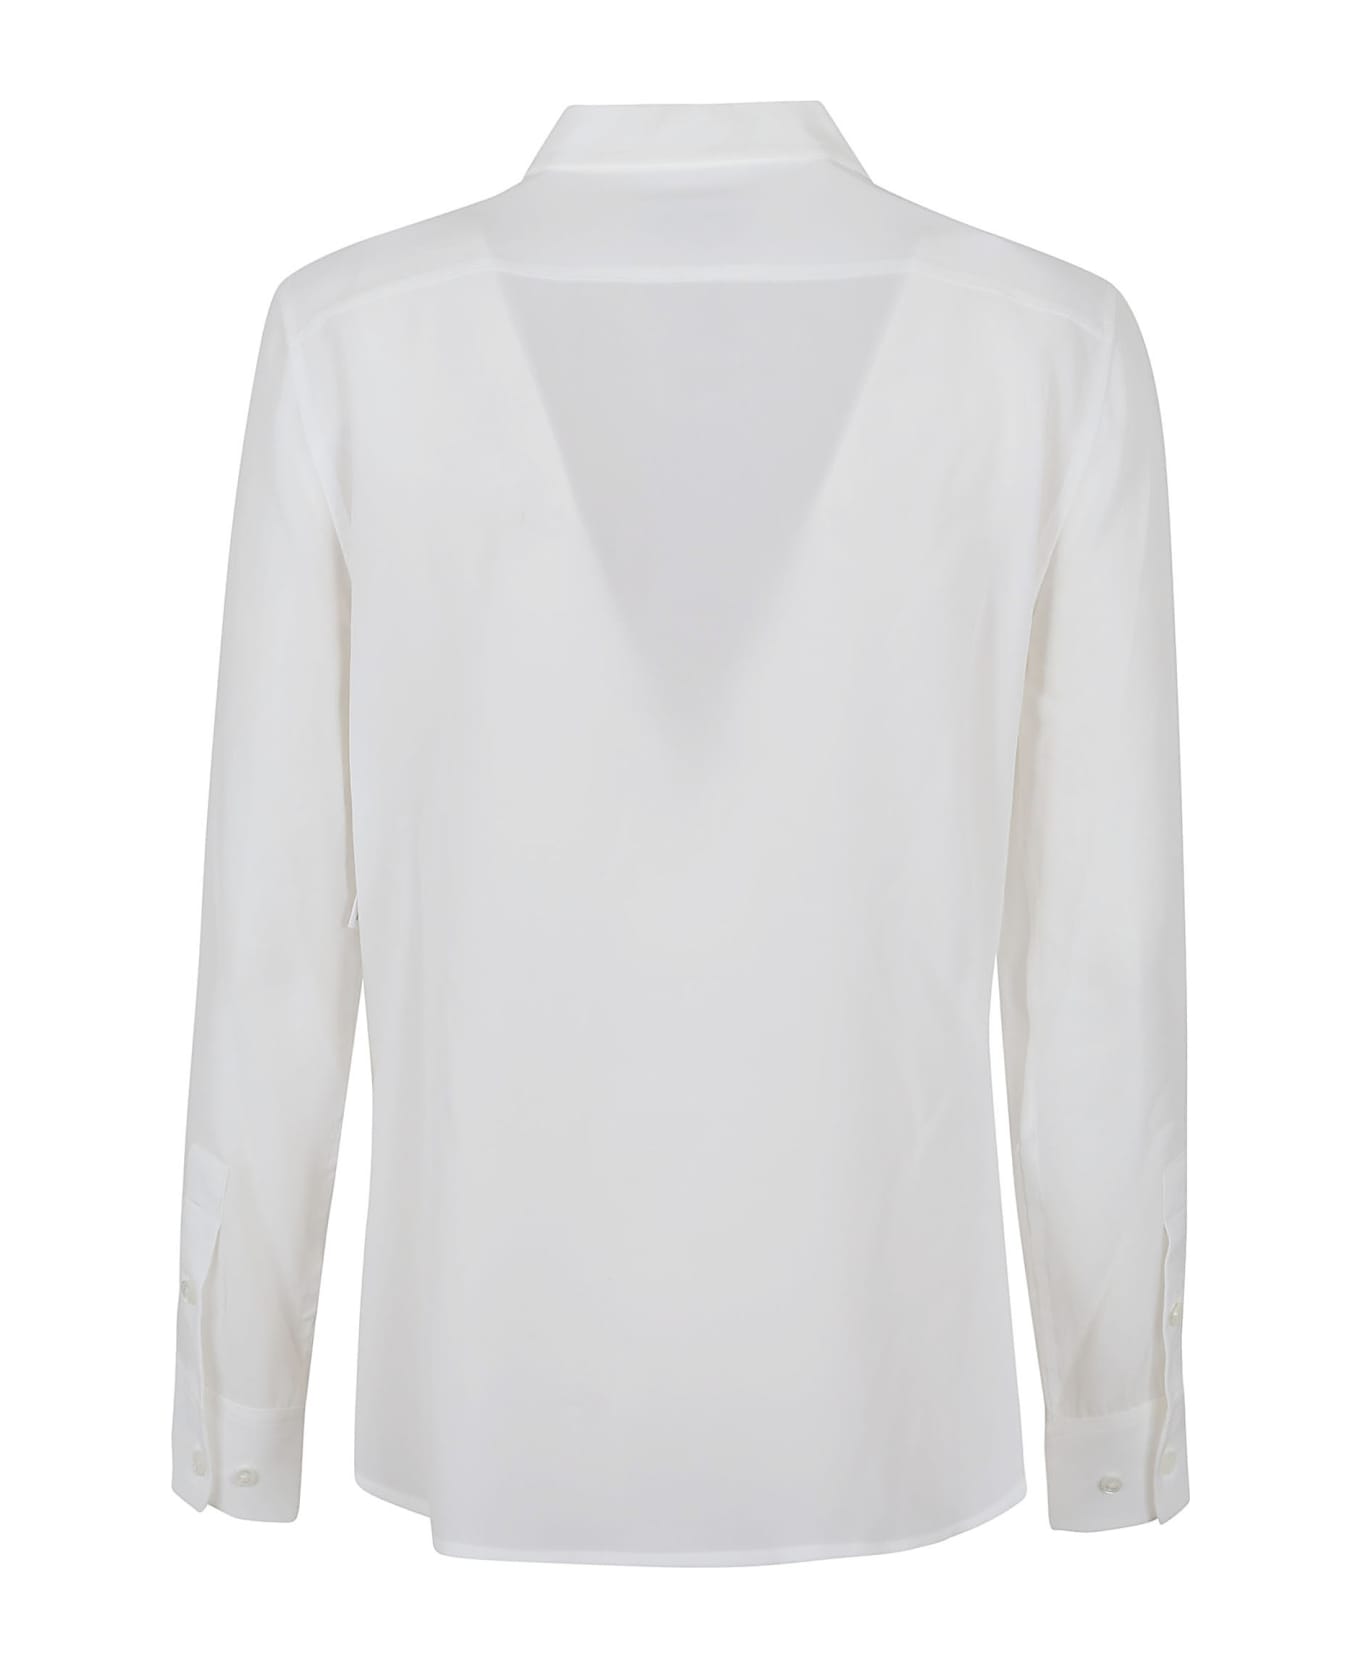 Equipment Leema Women Shirt Long Sleeves - Bright Wht Bright White シャツ